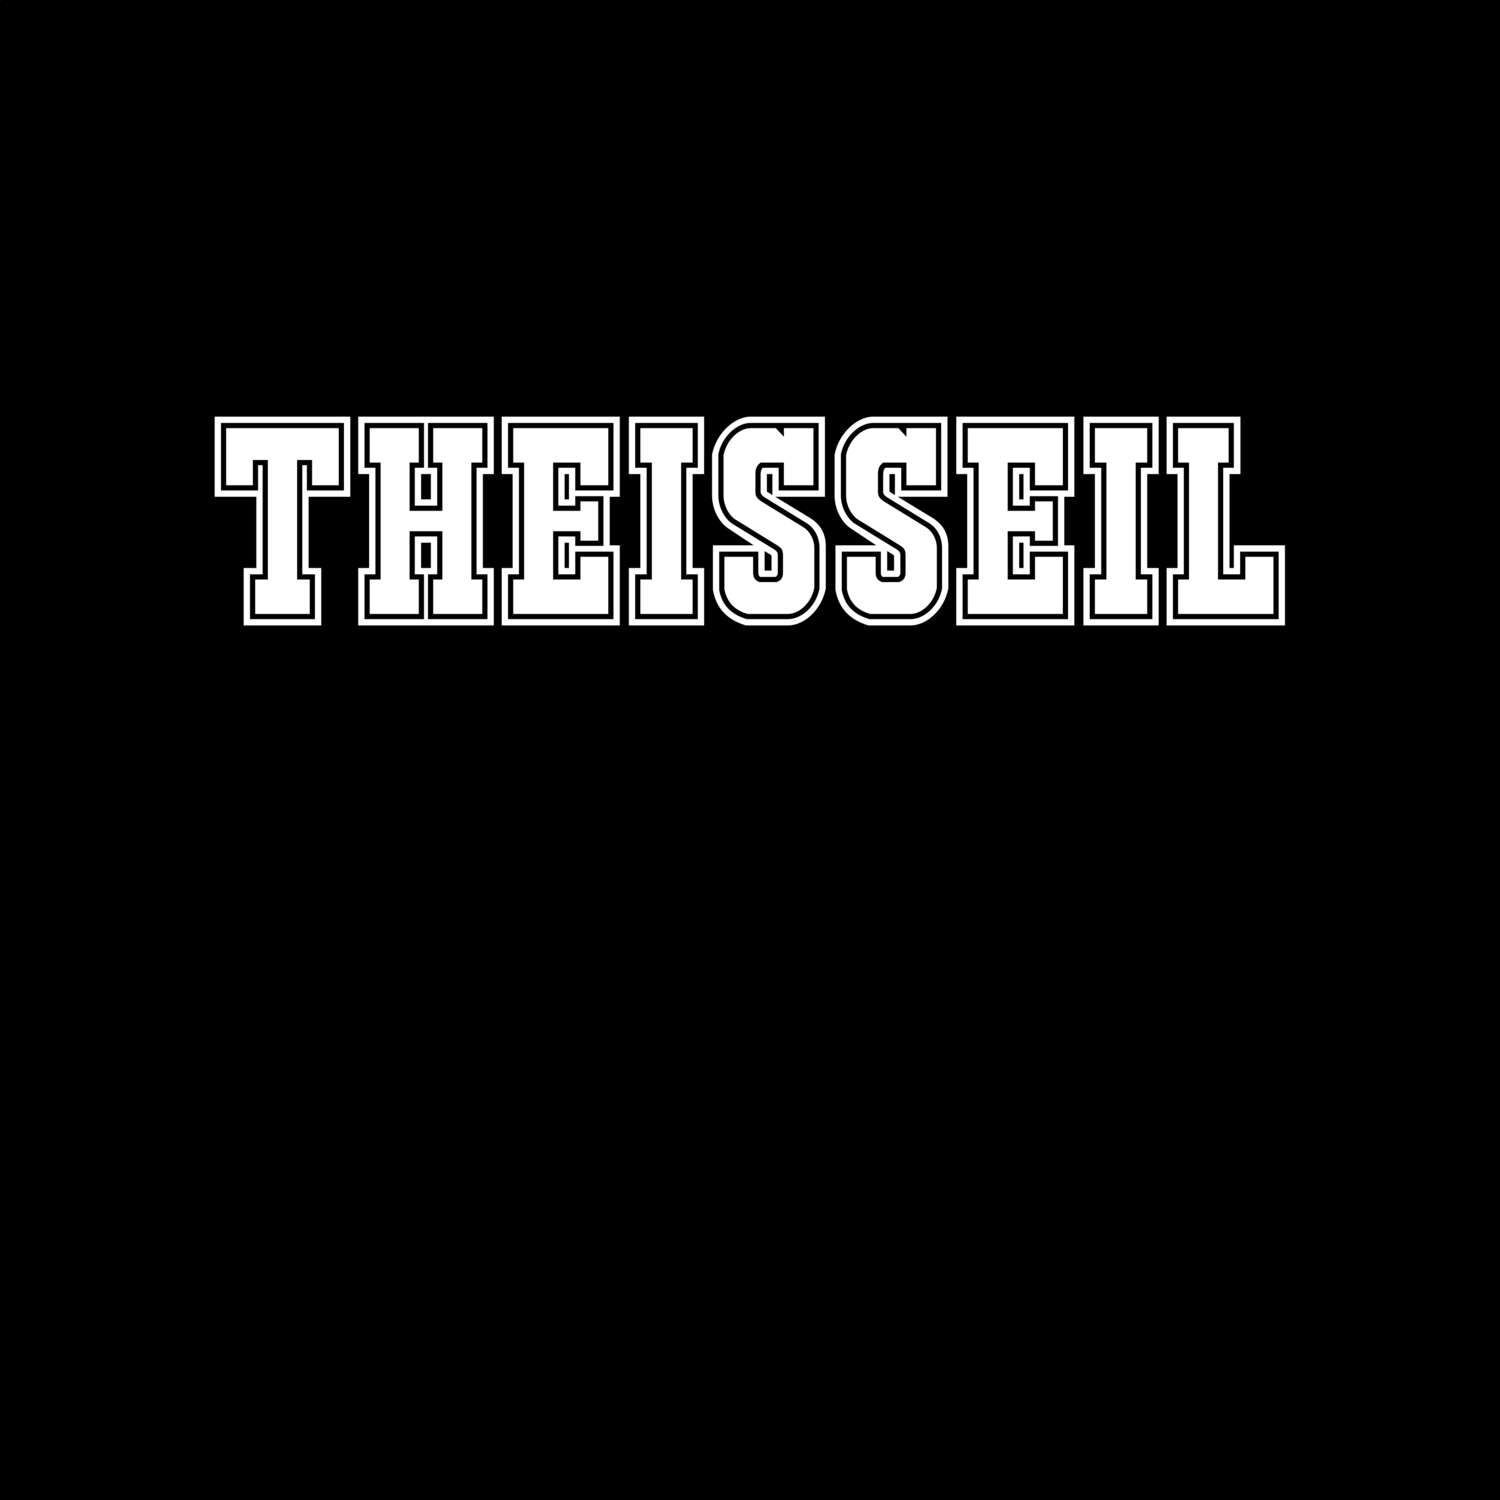 Theisseil T-Shirt »Classic«